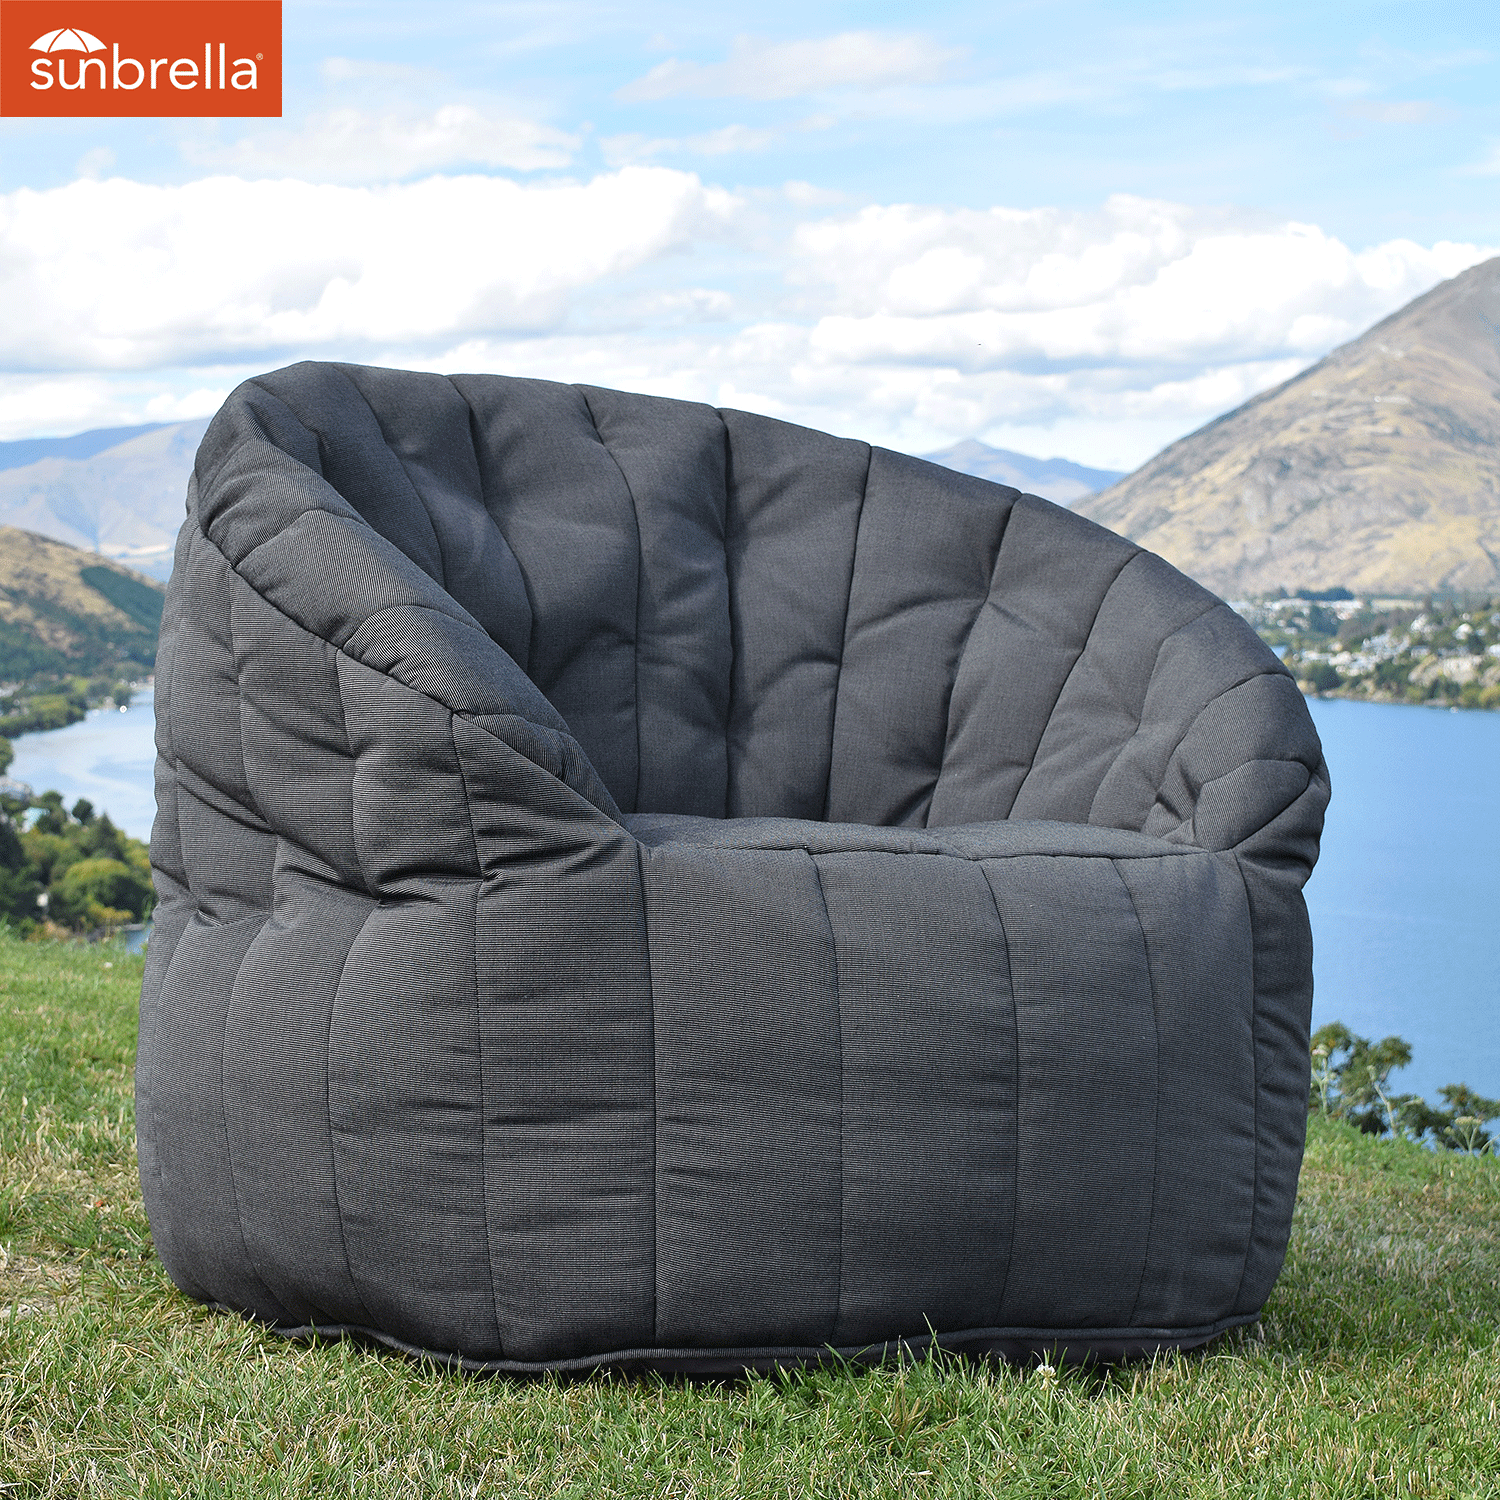 Outdoor Bean Bags | Butterfly Sofa - Black Rock (Sunbrella ...
